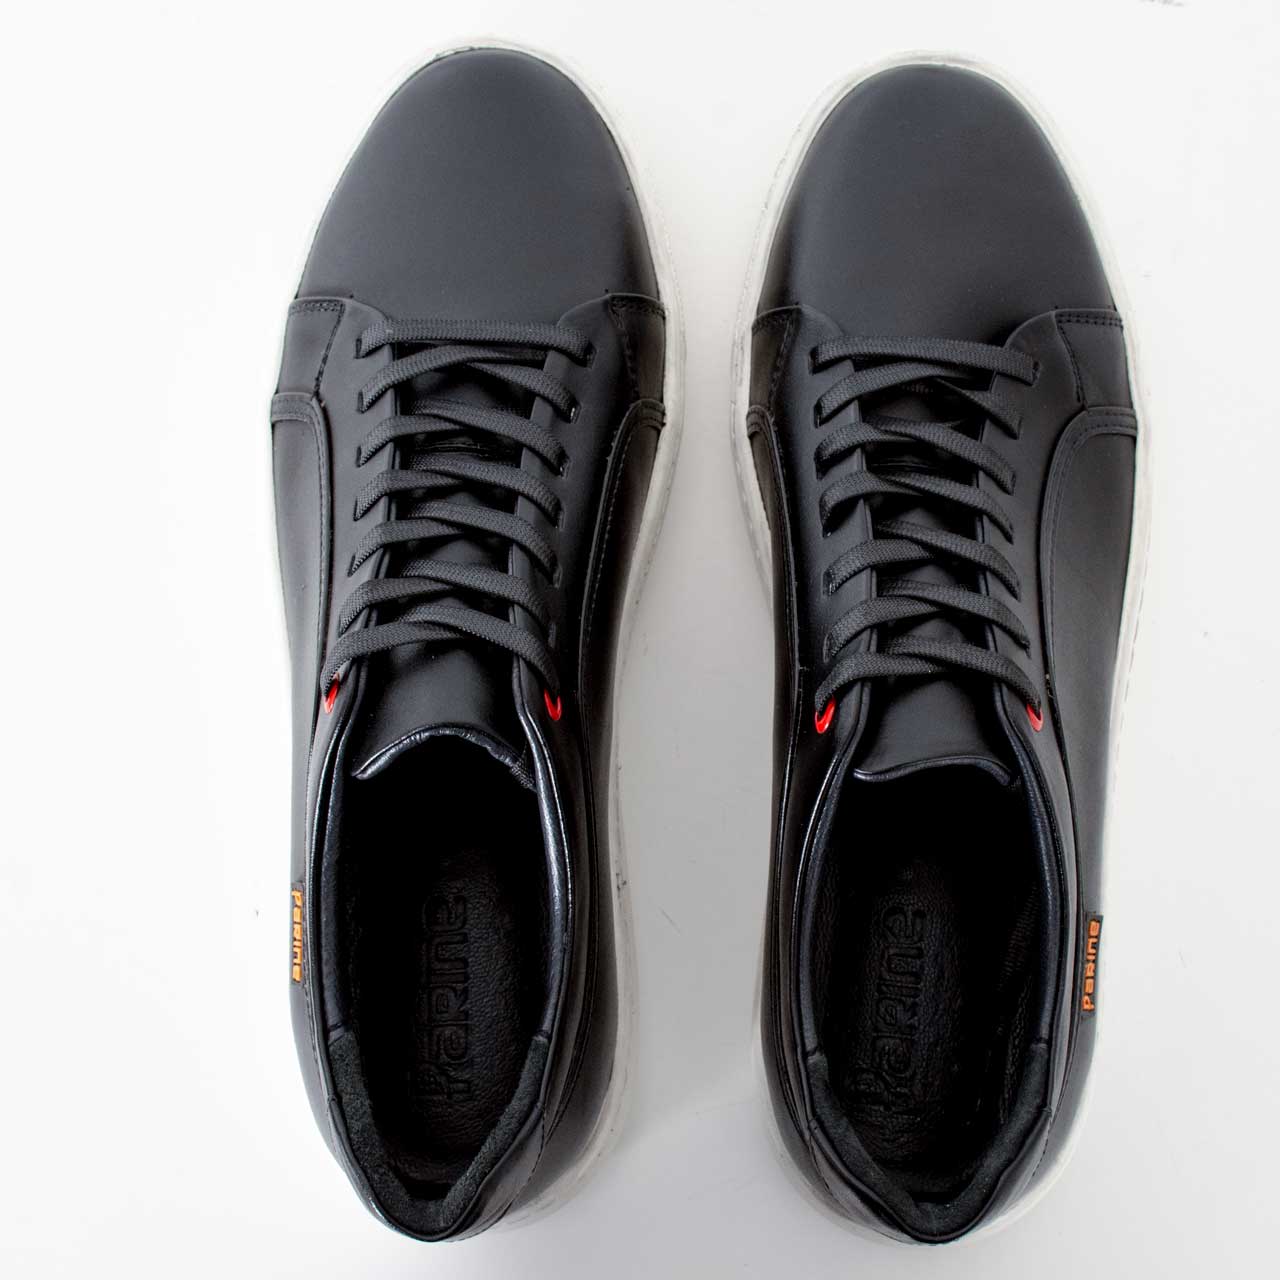 PARINECHARM leather men's casual shoes , SHO219 Model